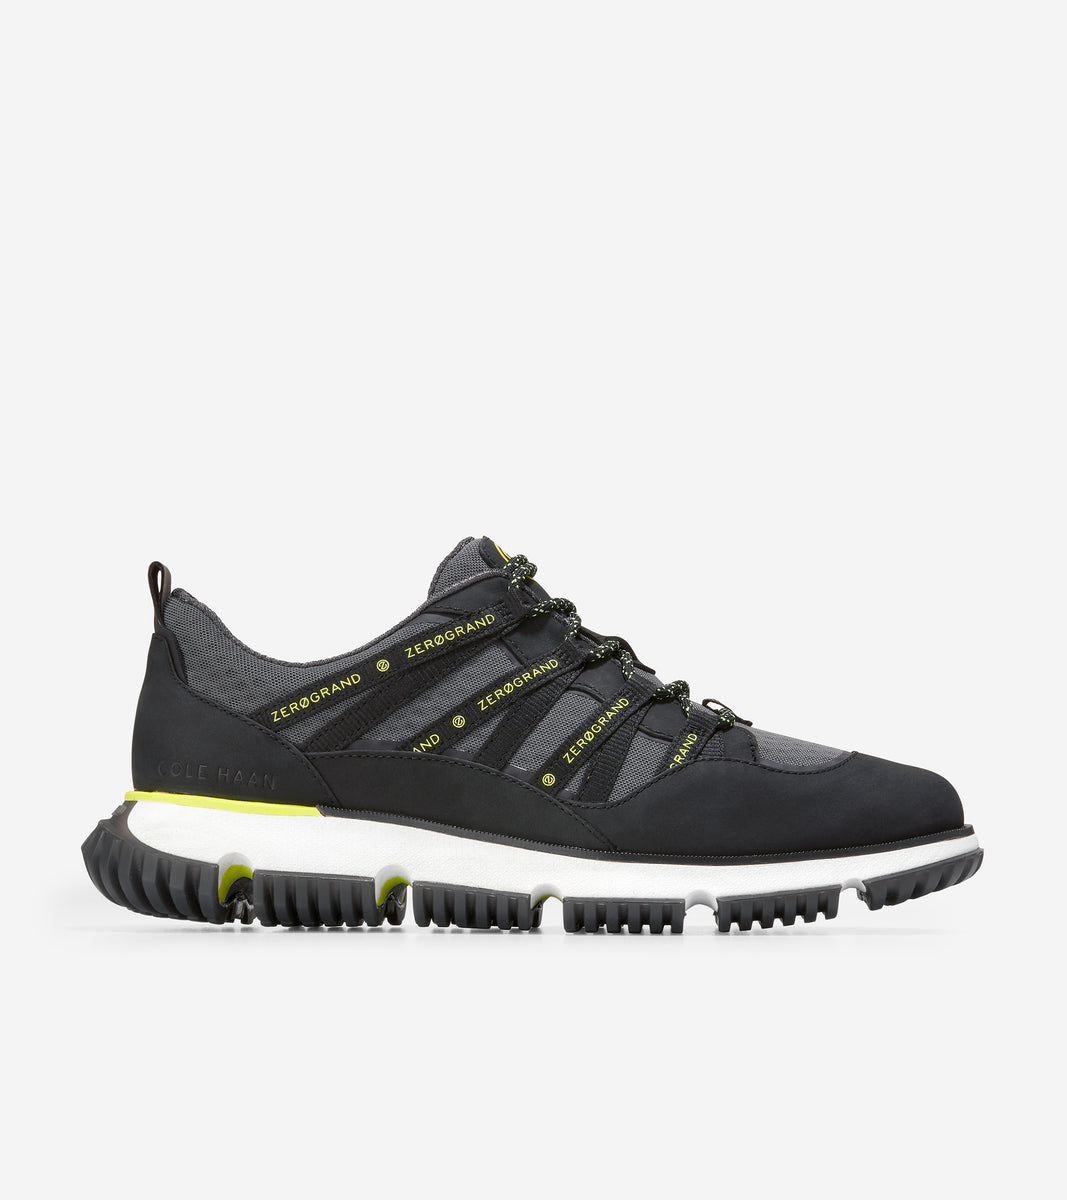 ColeHaan-4.ZERØGRAND Seventy-Five Sneaker-c33823-Black-Grey Pinstripe-Safety Yellow